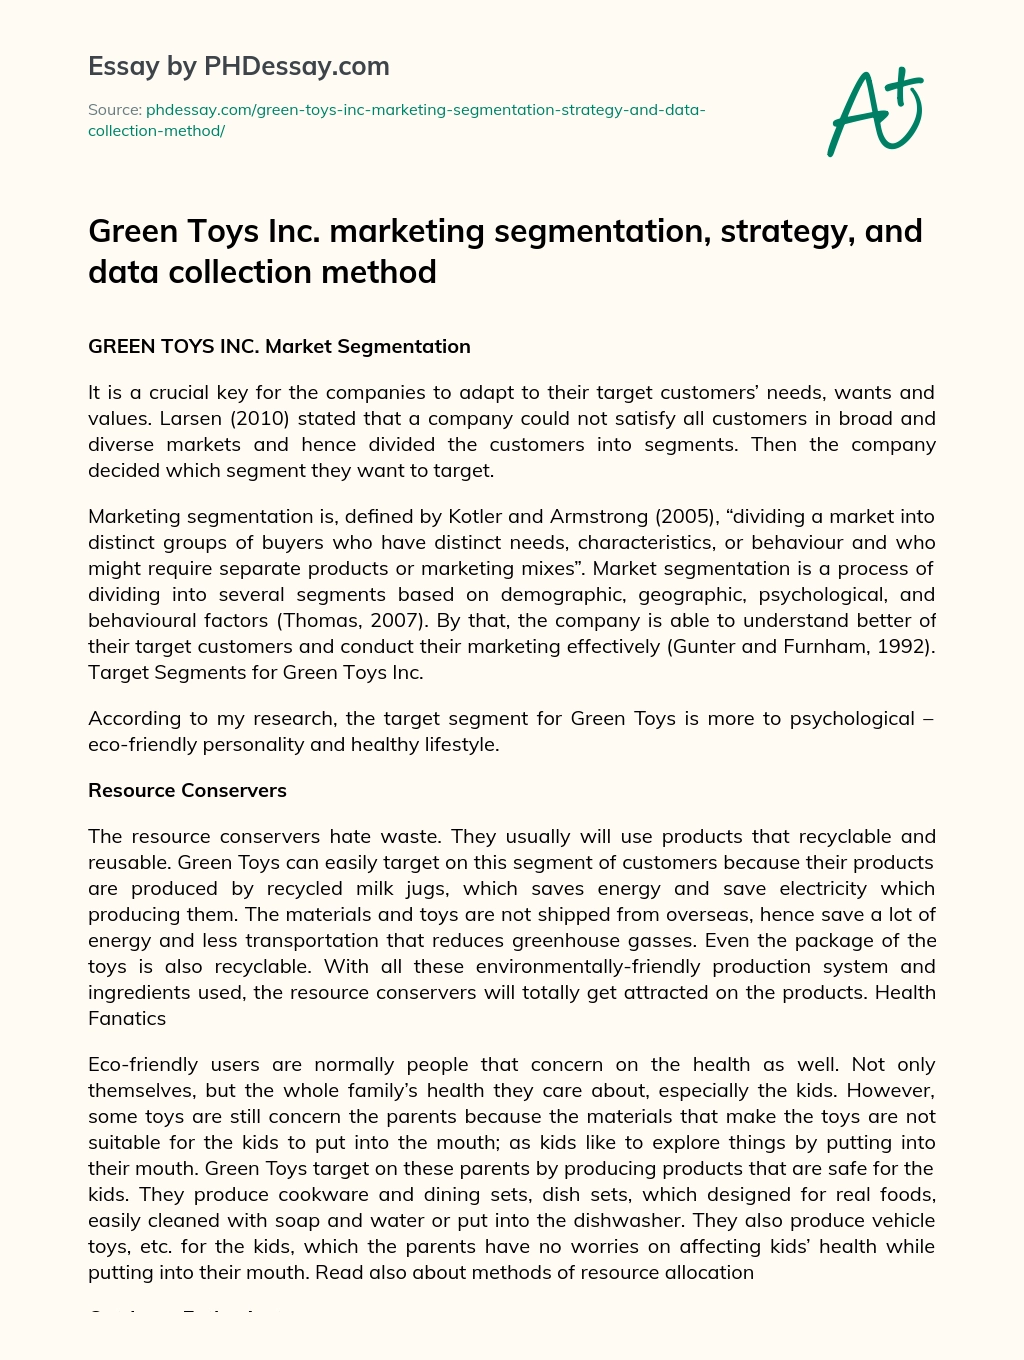 Green Toys Inc. marketing segmentation, strategy, and data collection method essay